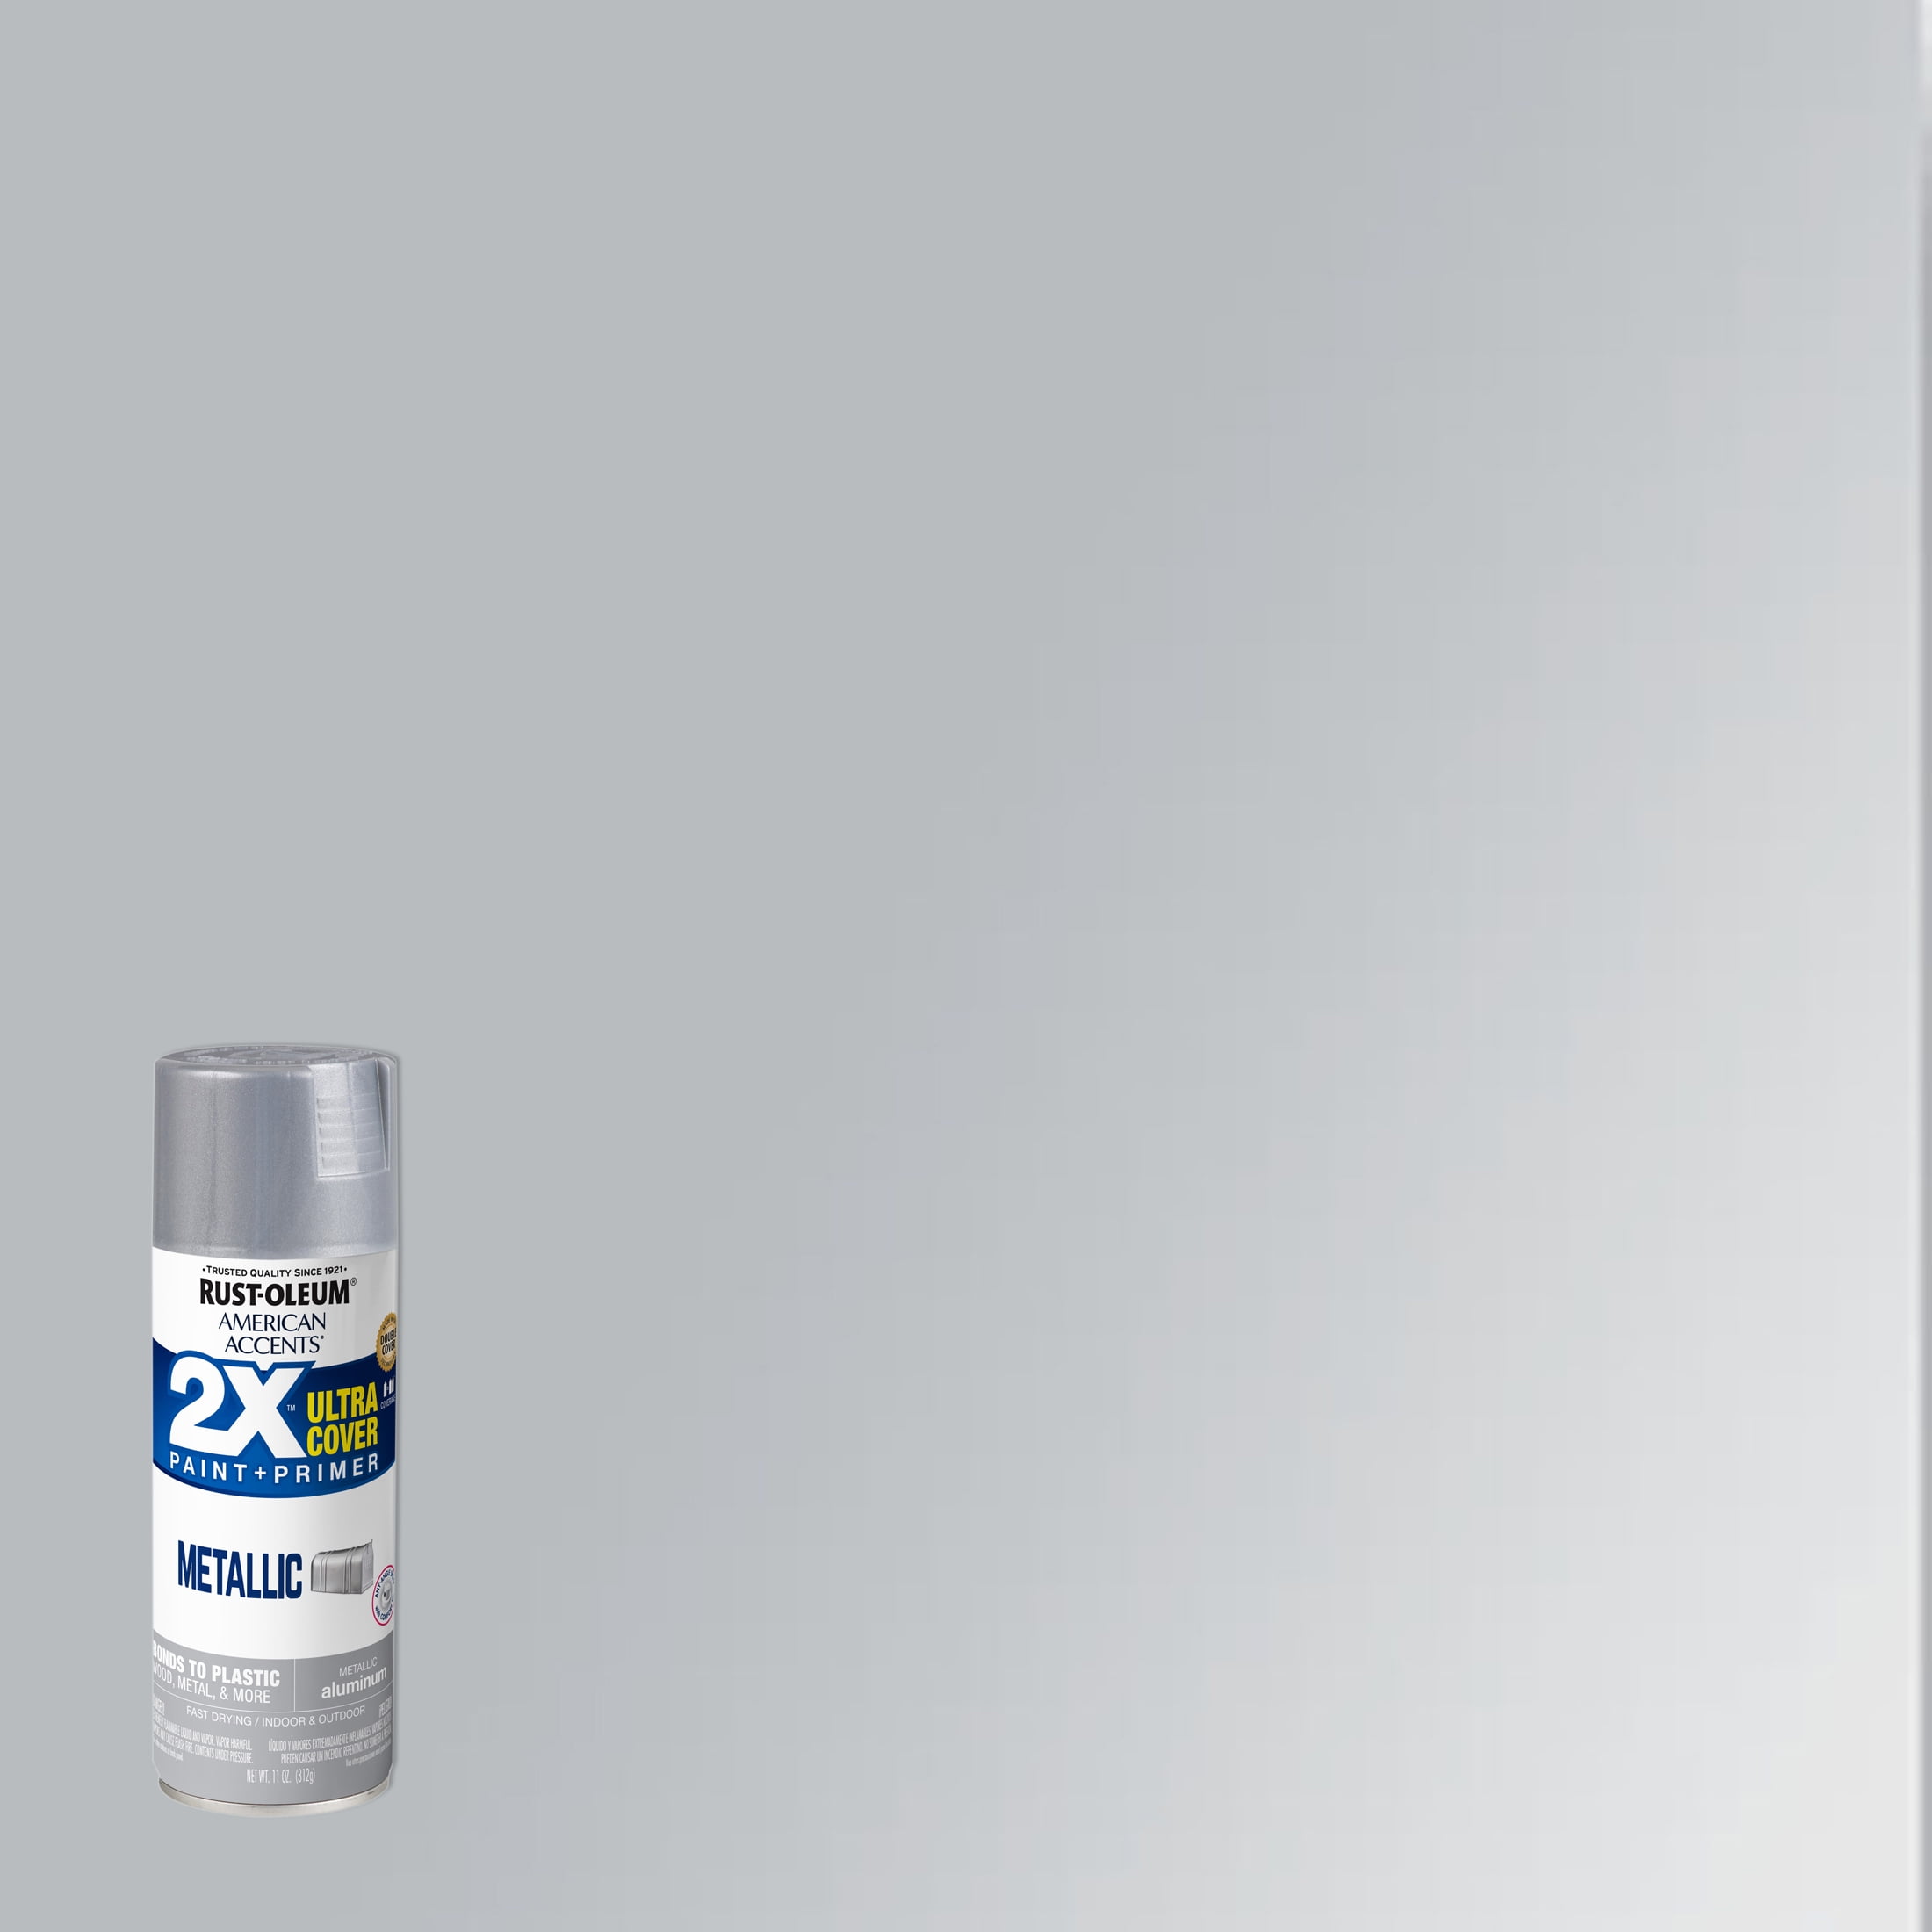 Aluminum, Rust-Oleum American Accents 2X Ultra Cover Metallic Spray Paint- 12 oz